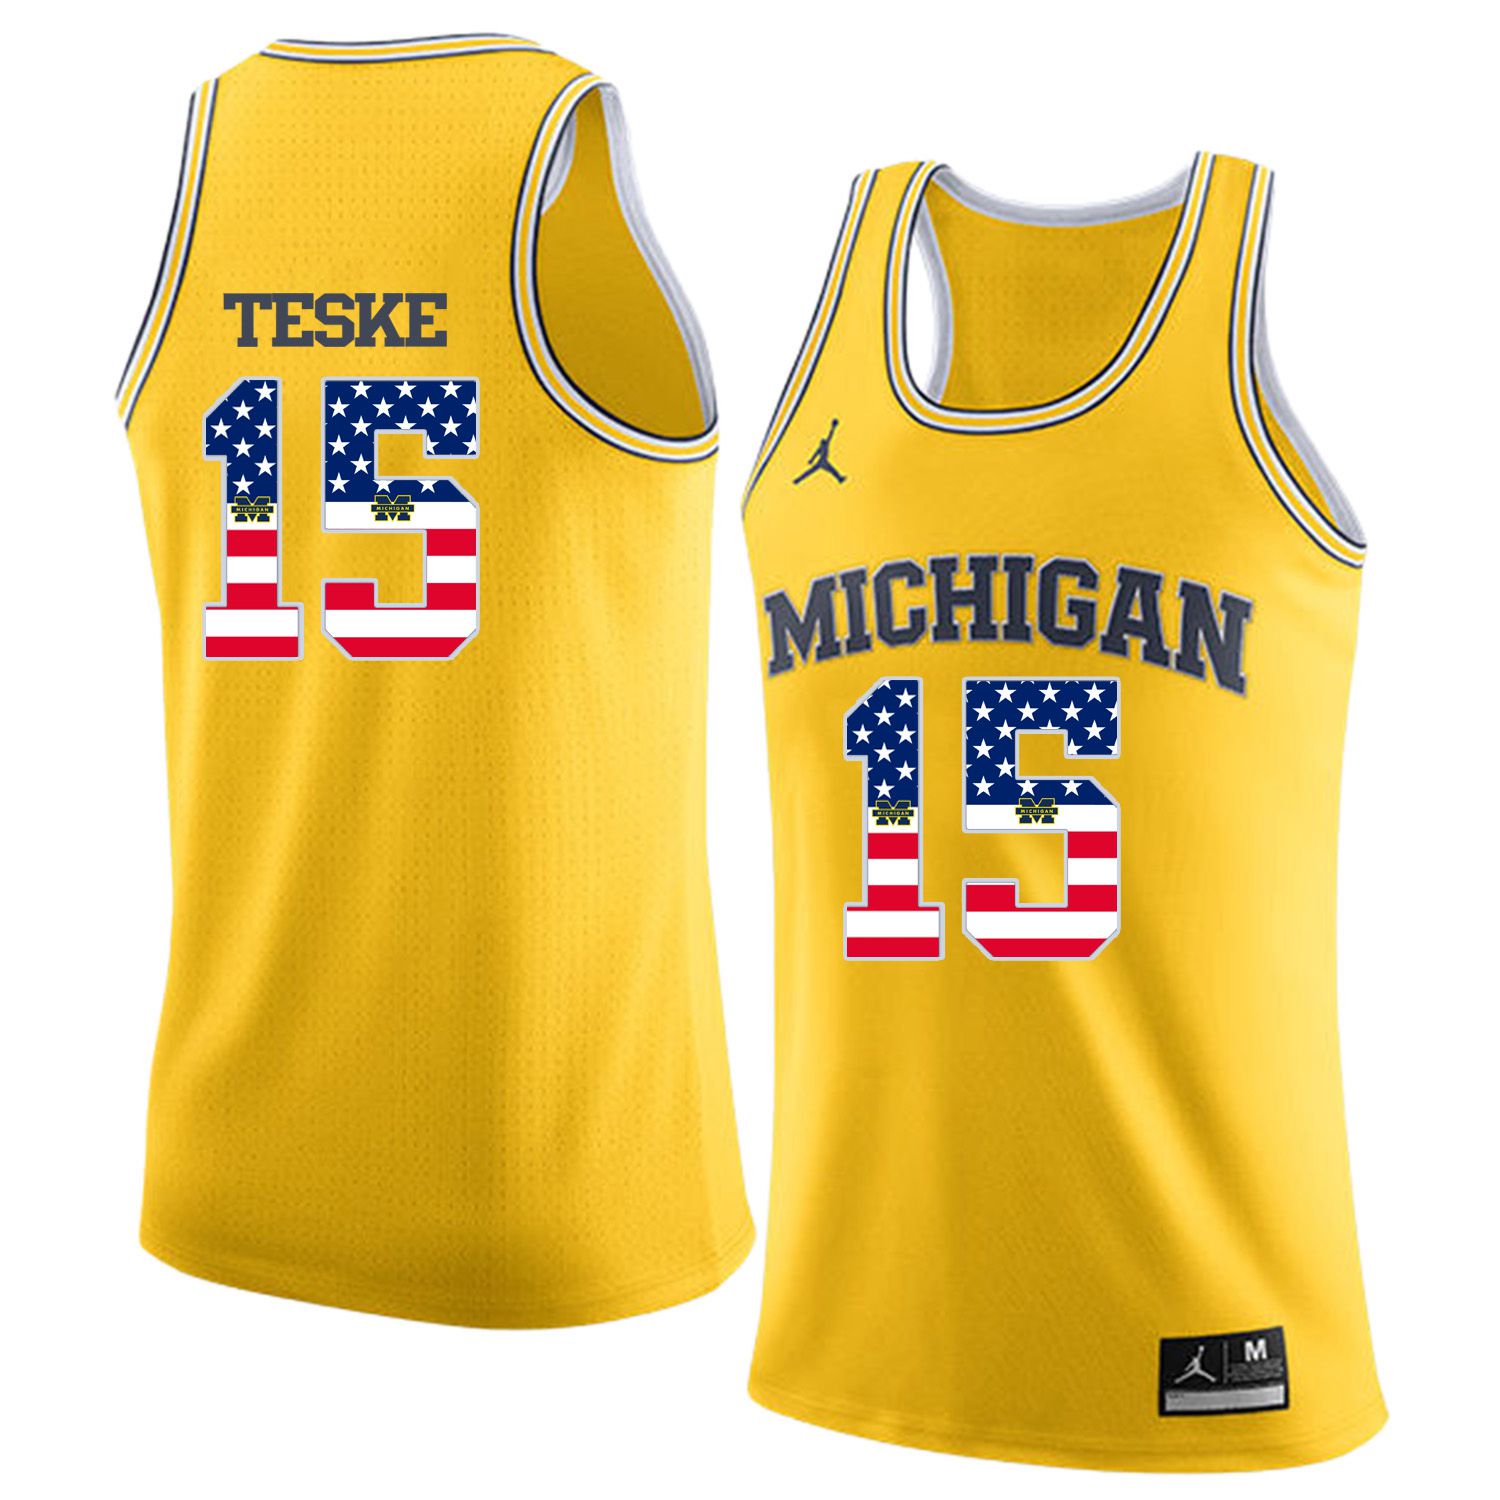 Men Jordan University of Michigan Basketball Yellow 15 Teske Flag Customized NCAA Jerseys